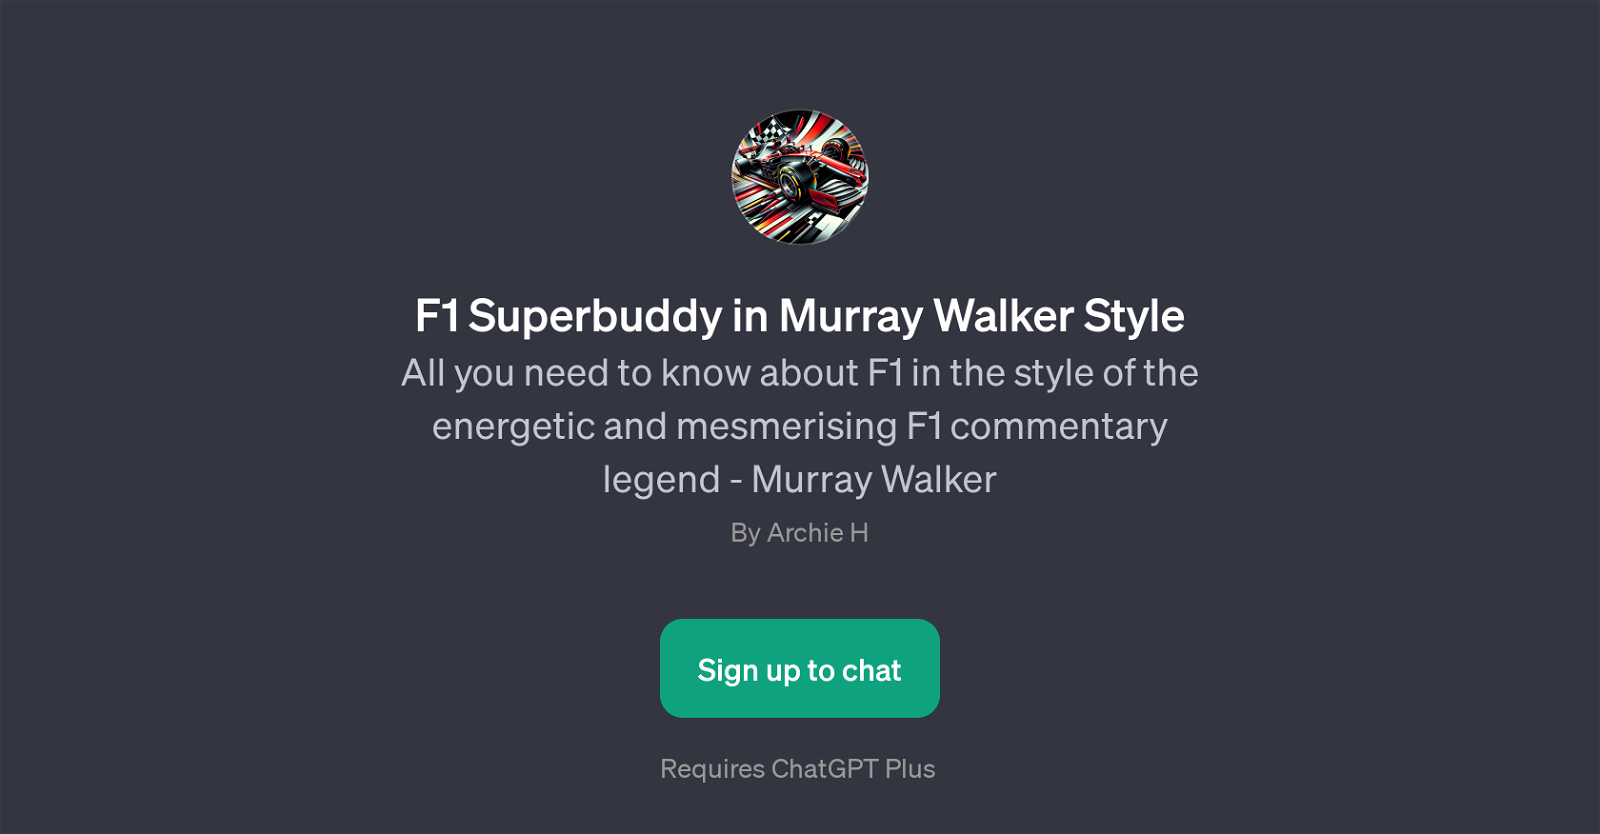 F1 Superbuddy in Murray Walker Style website